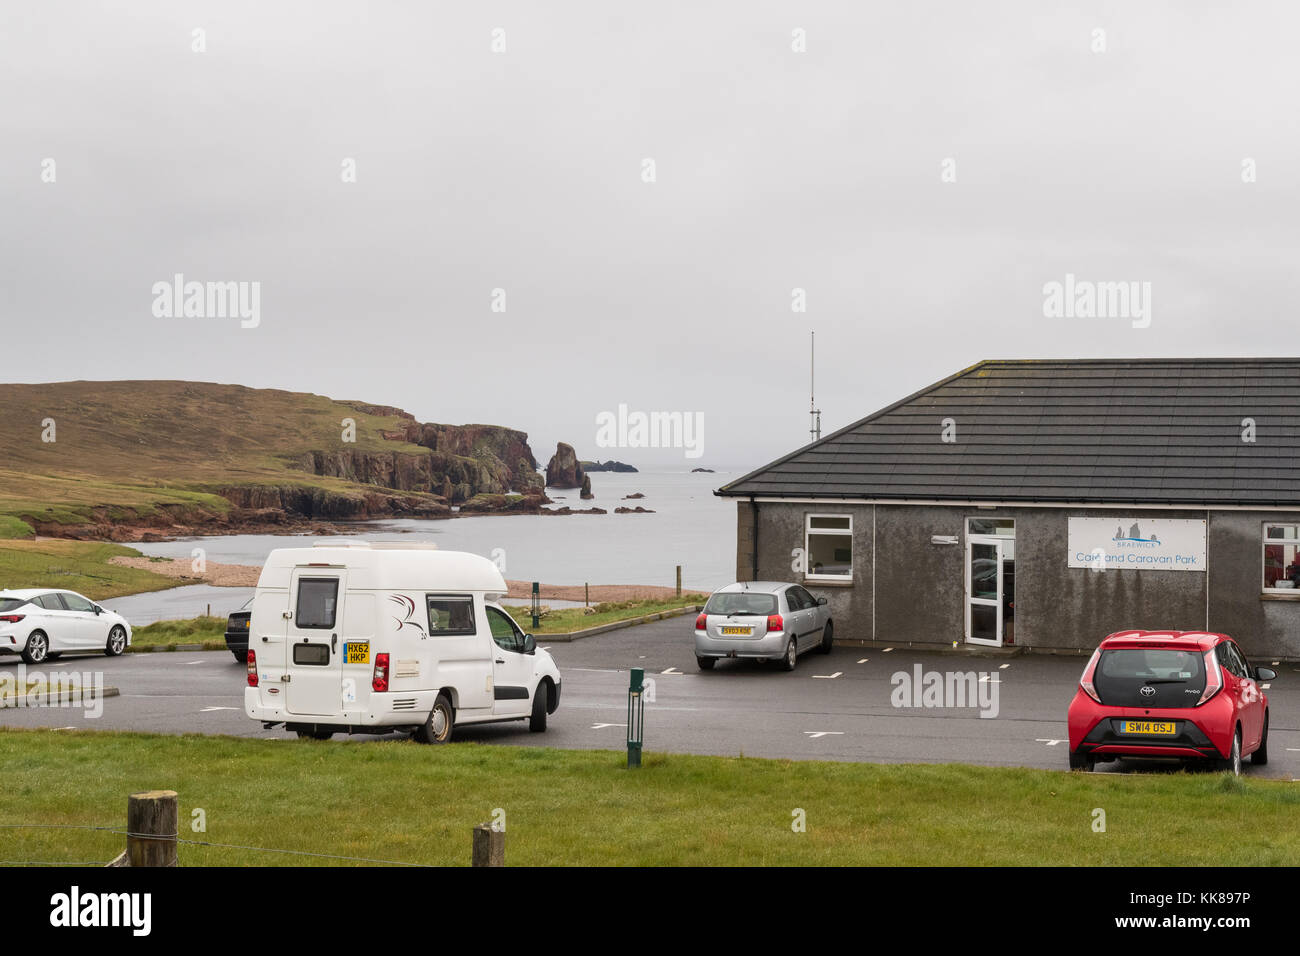 Café-Campingplatz Braewick, Eshaness, Shetland-Inseln, Schottland Großbritannien Stockfoto